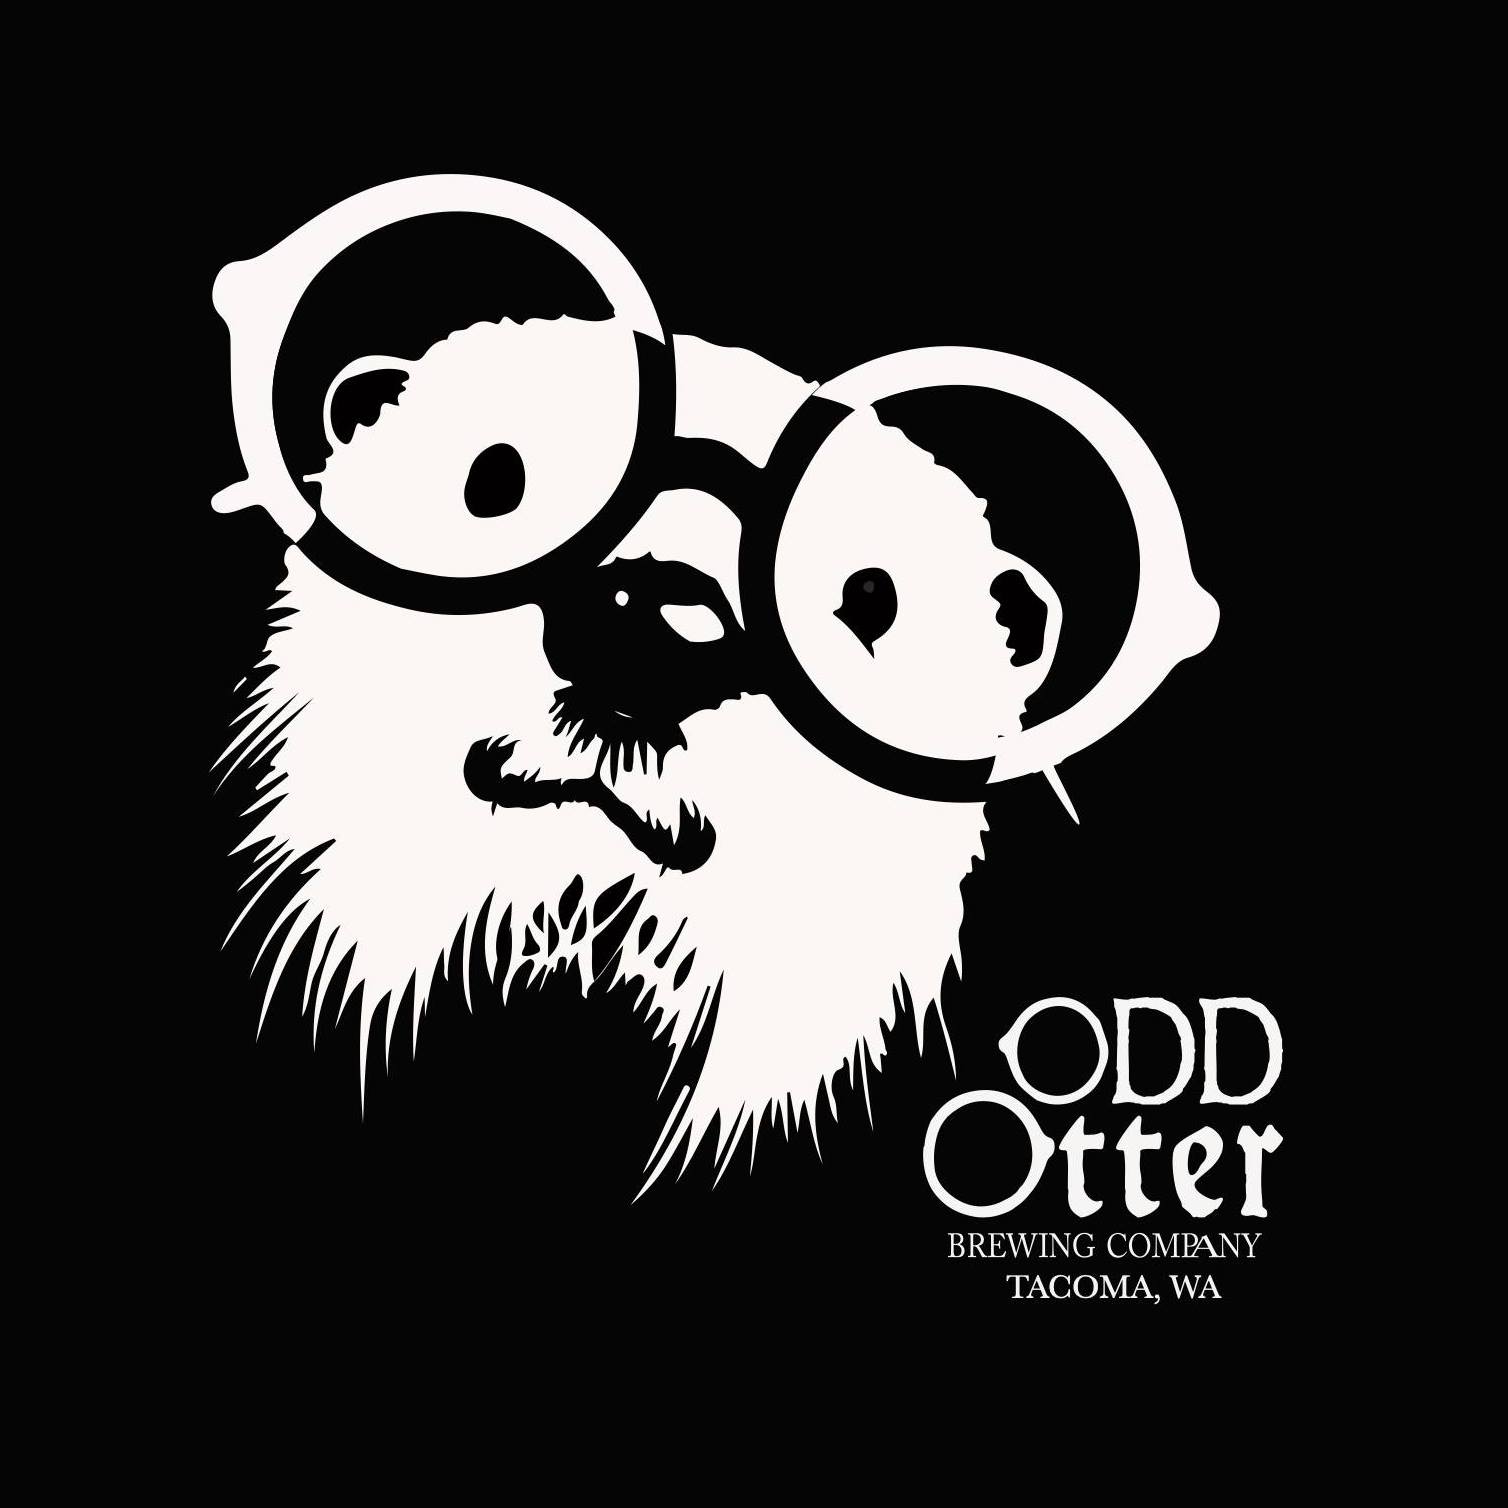 Company logo of Odd Otter Brewing Company